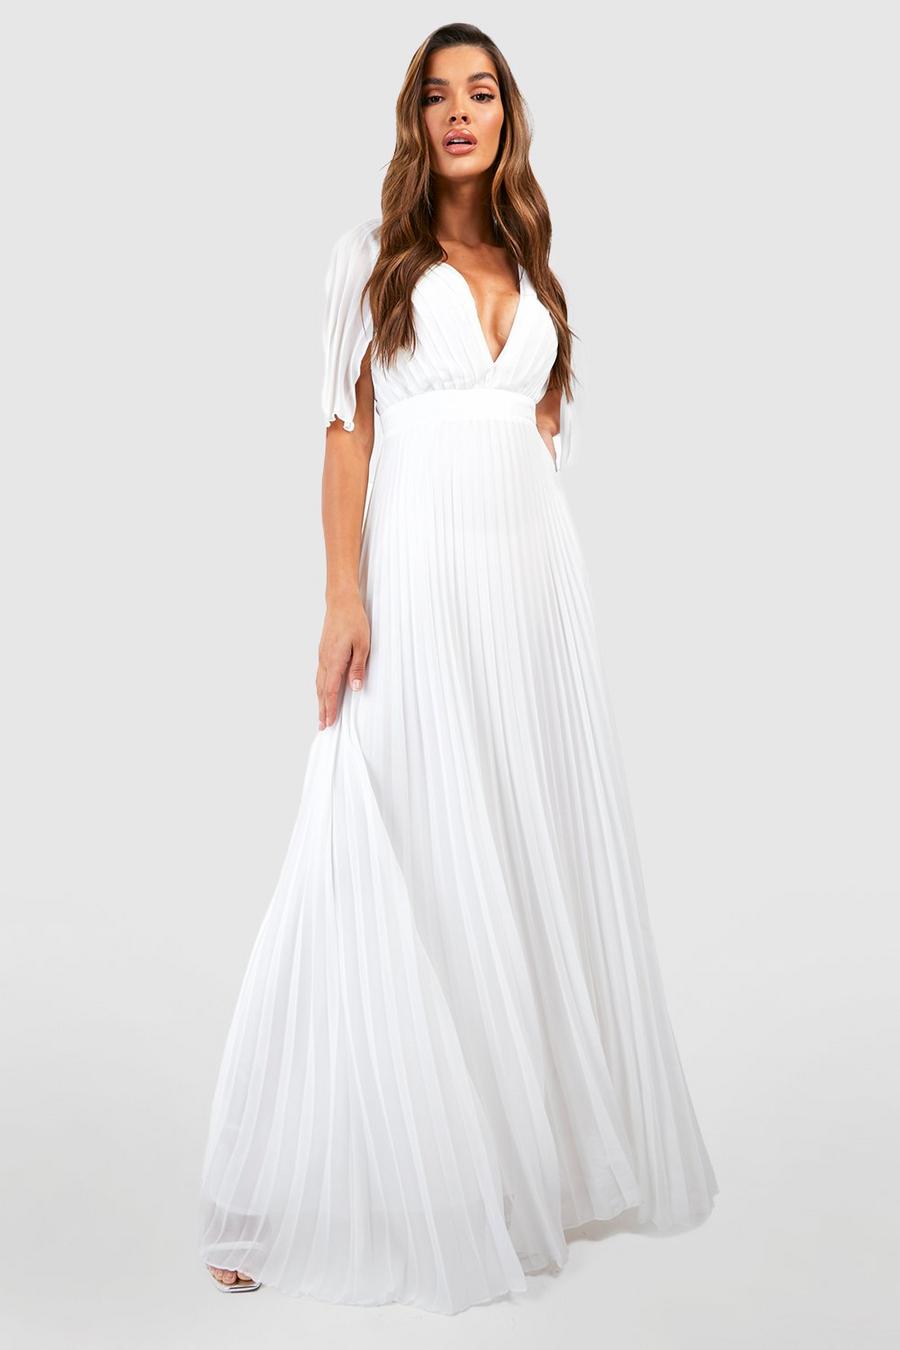 Ivory Satin Twist Front Maxi Bridesmaid Dress